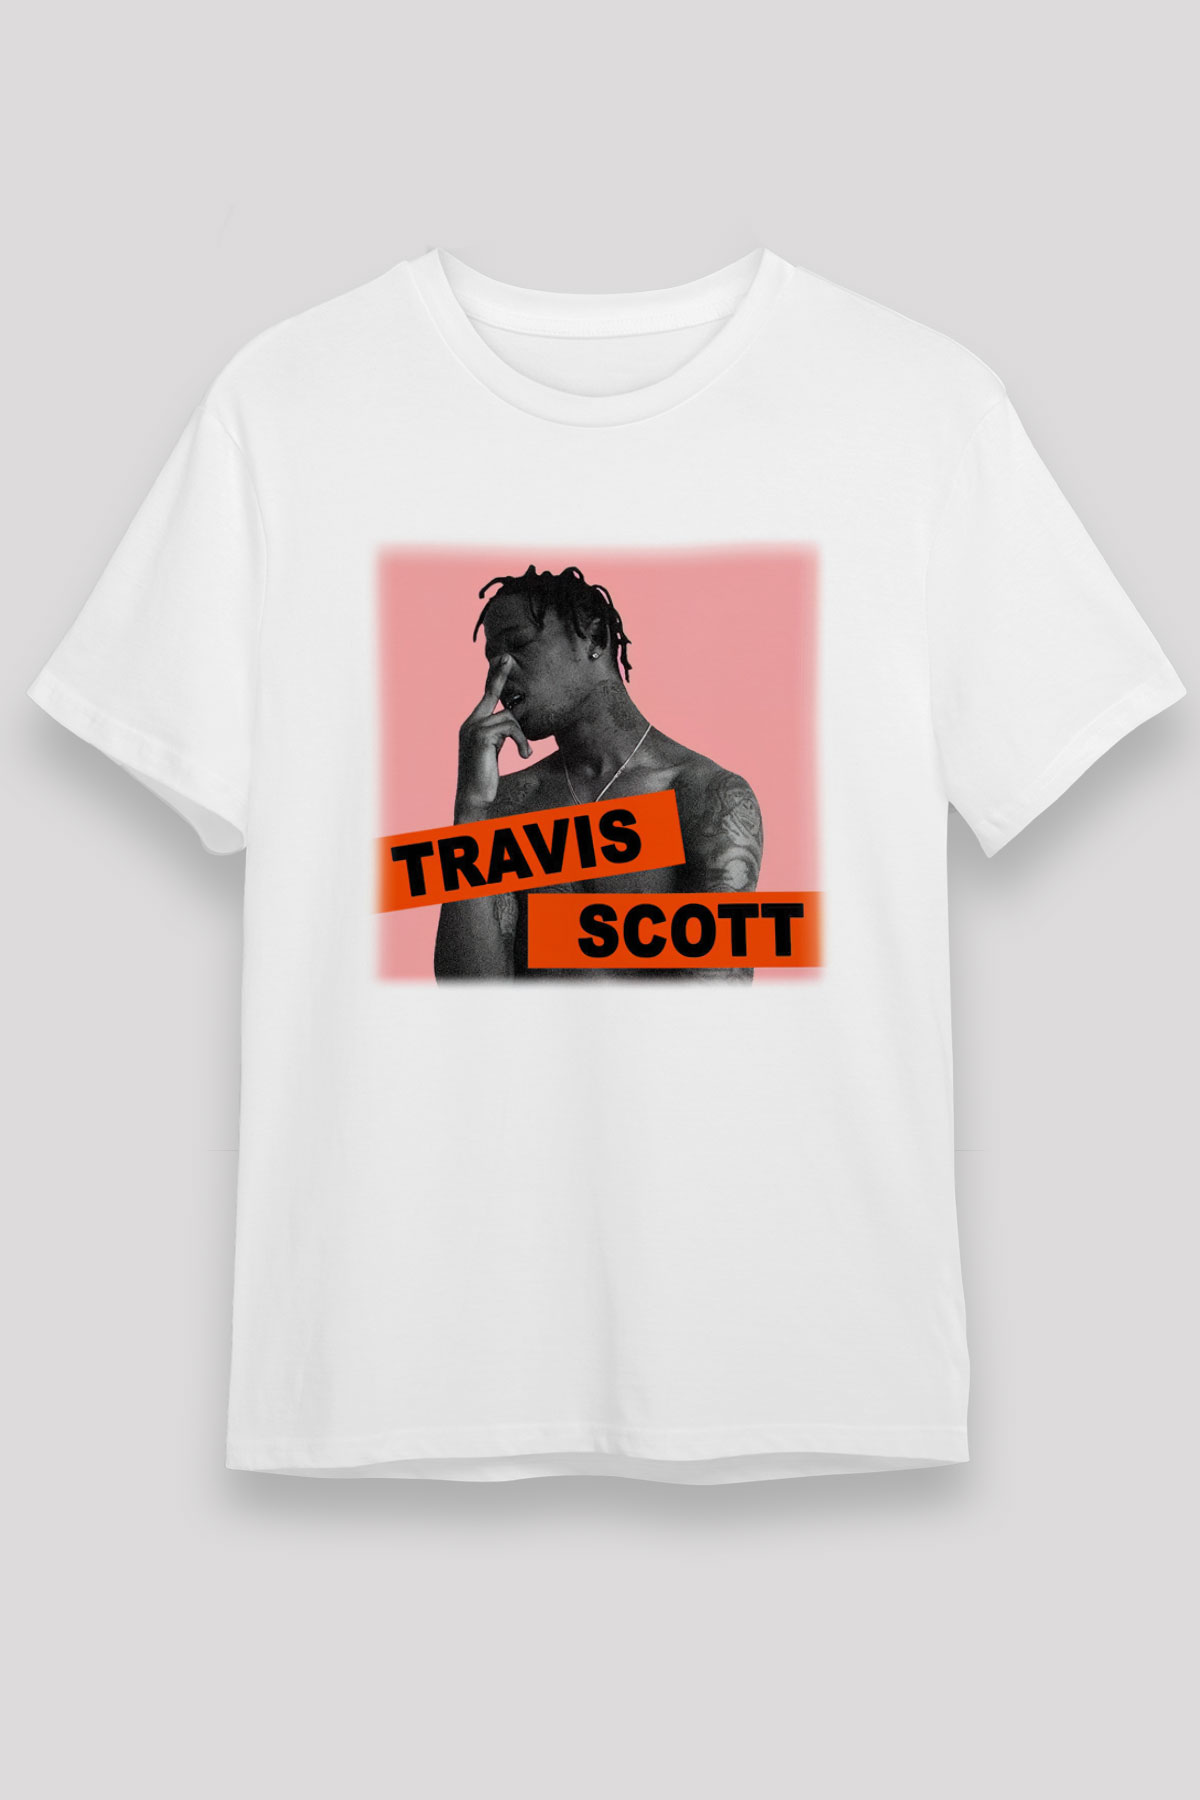 Travis Scott T shirt,Hip Hop,Rap Tshirt 16